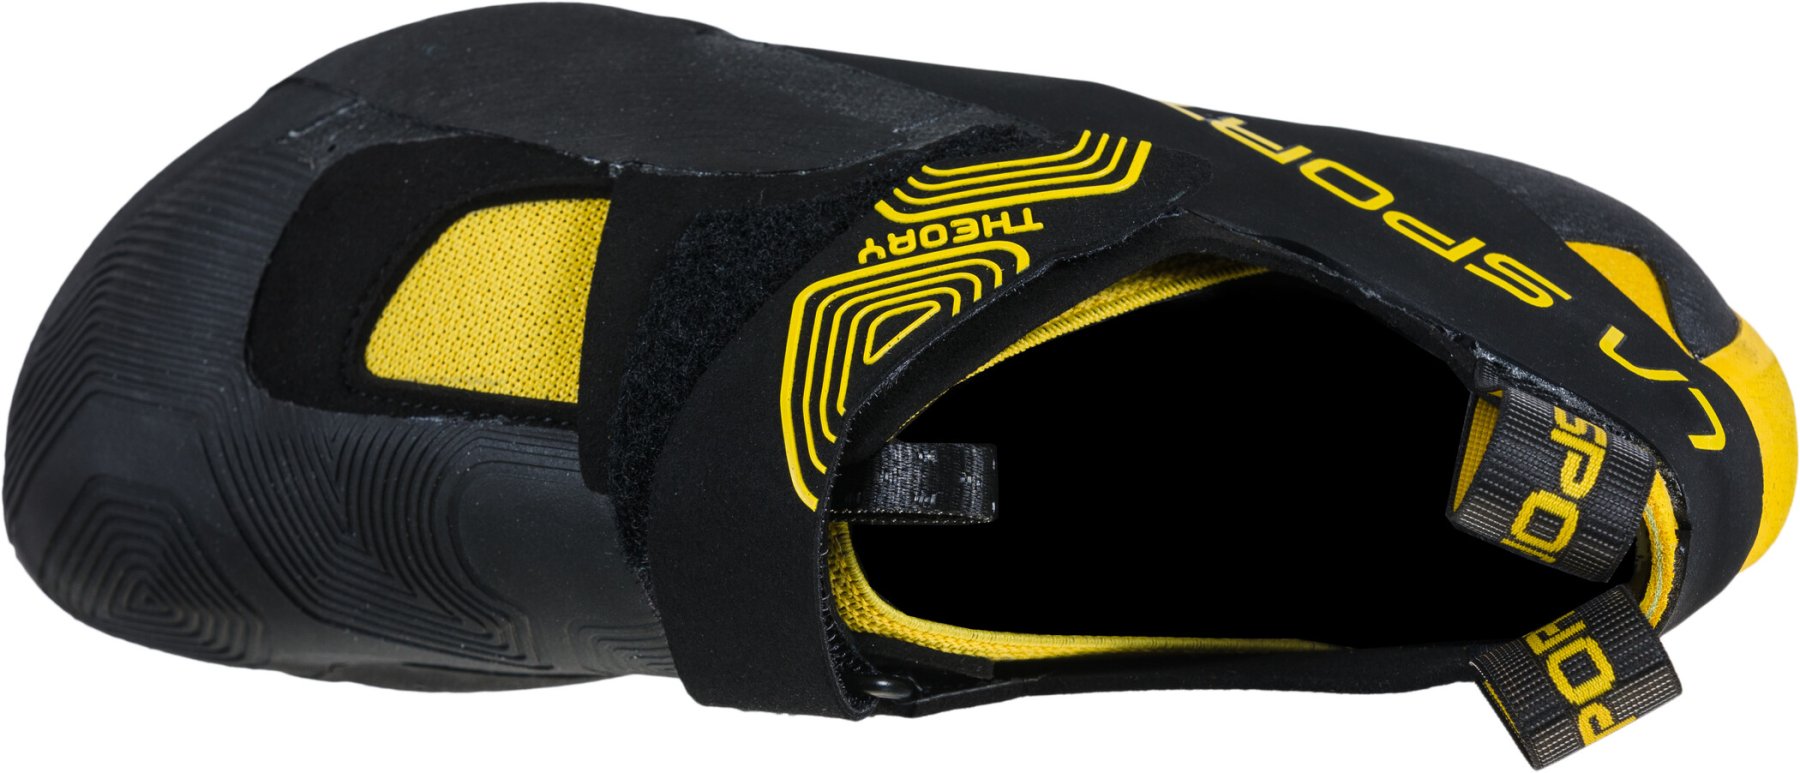 Theory - black/yellow, men's climbing shoes